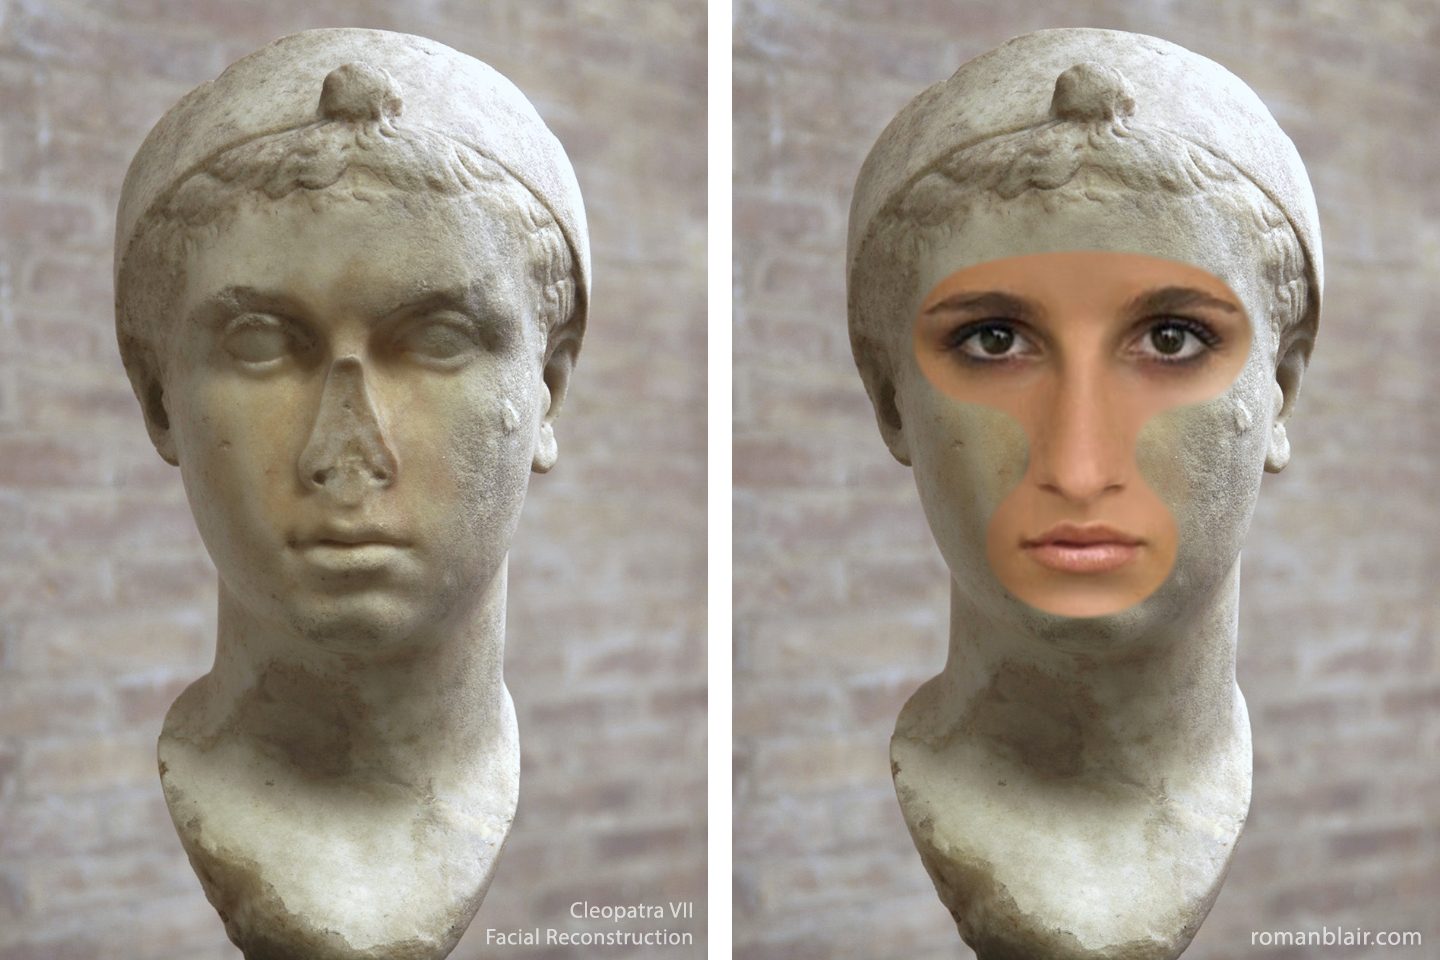 cleopatra facial restoration, cleopatra, what did cleopatra look like, was cleopatra beautiful, cleopatra vii, roman blair, cleopatra facial reconstruction